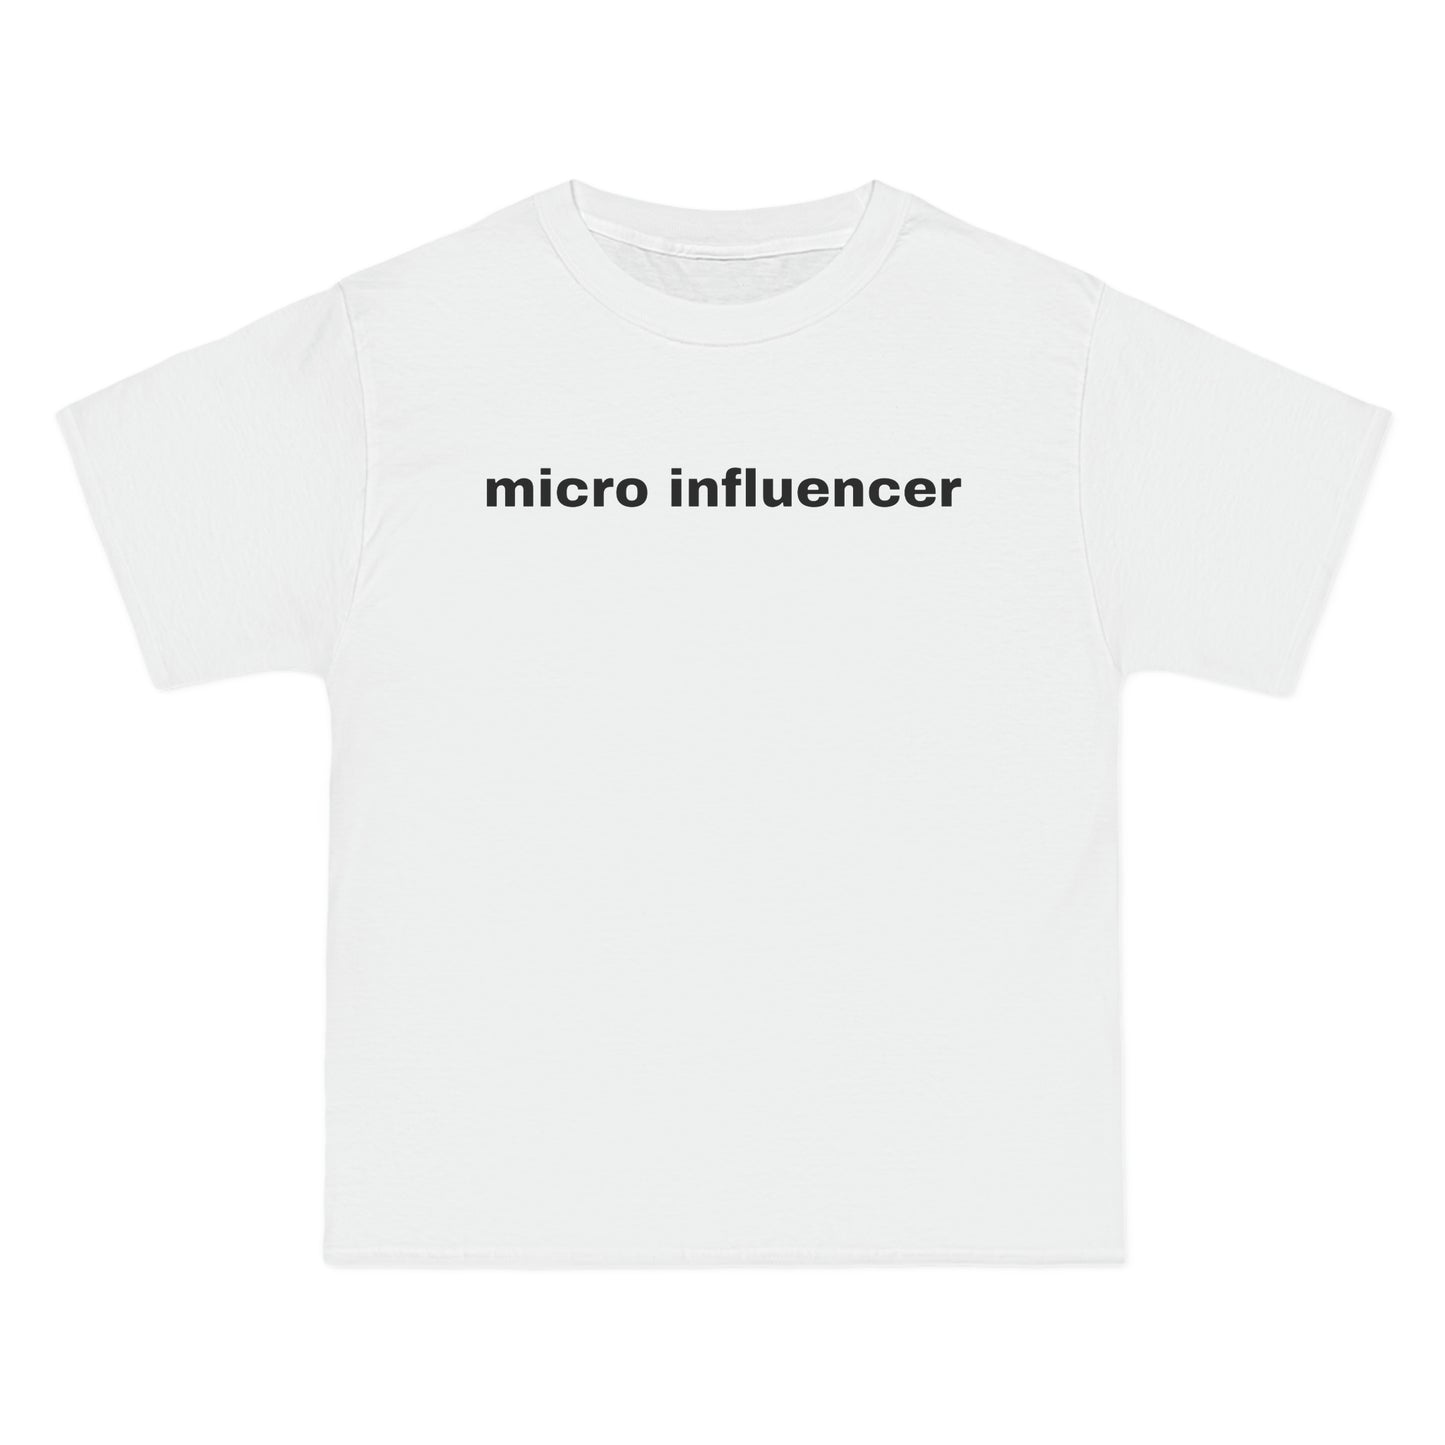 micro influencer Tee